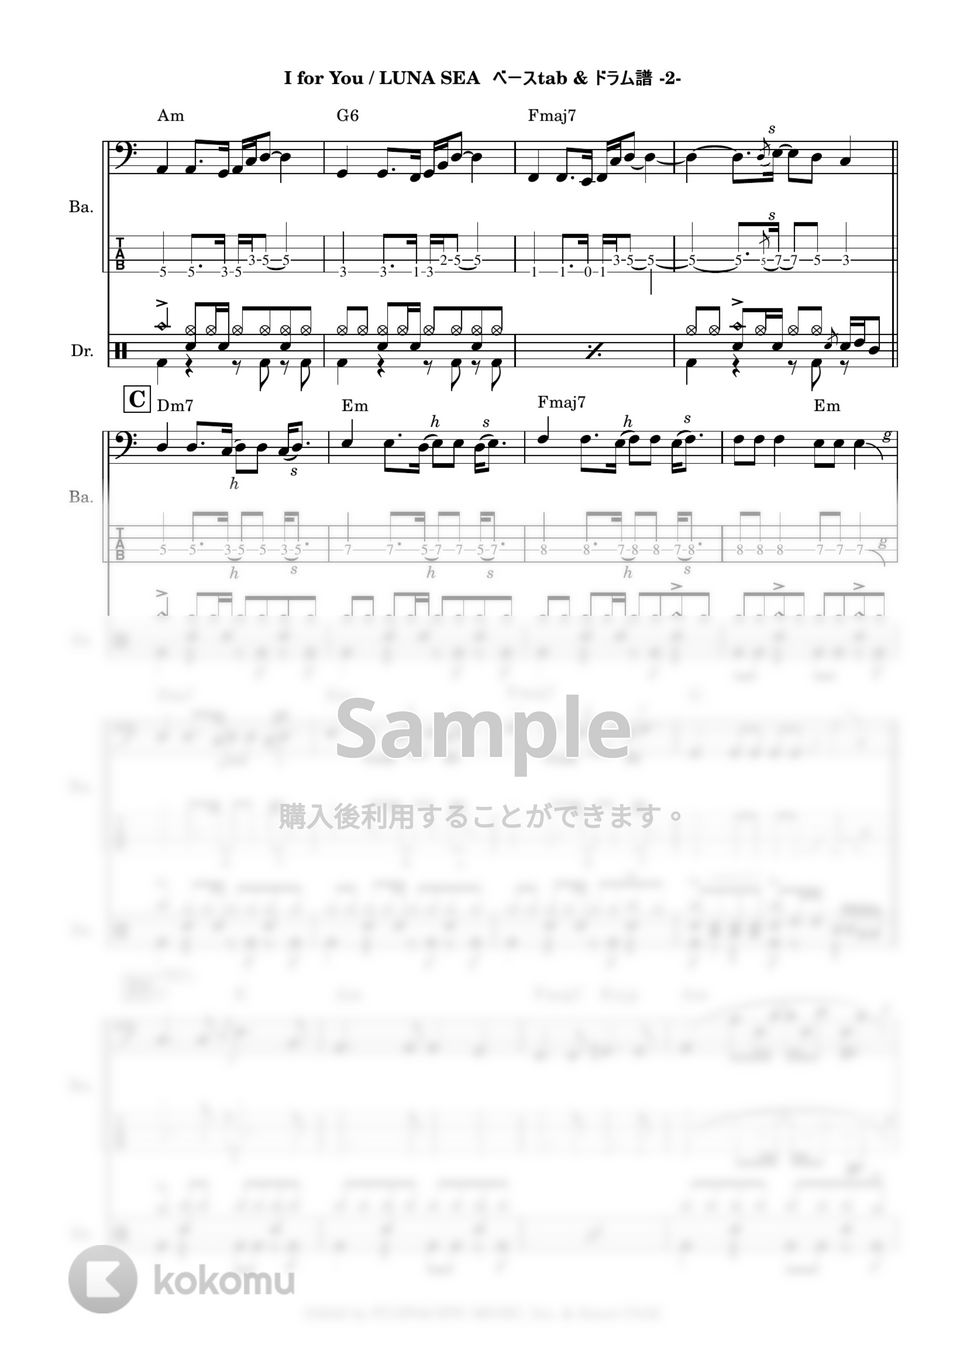 LUNA SEA - I for You (ベースtab & ドラム譜 midi付) by 鈴木建作